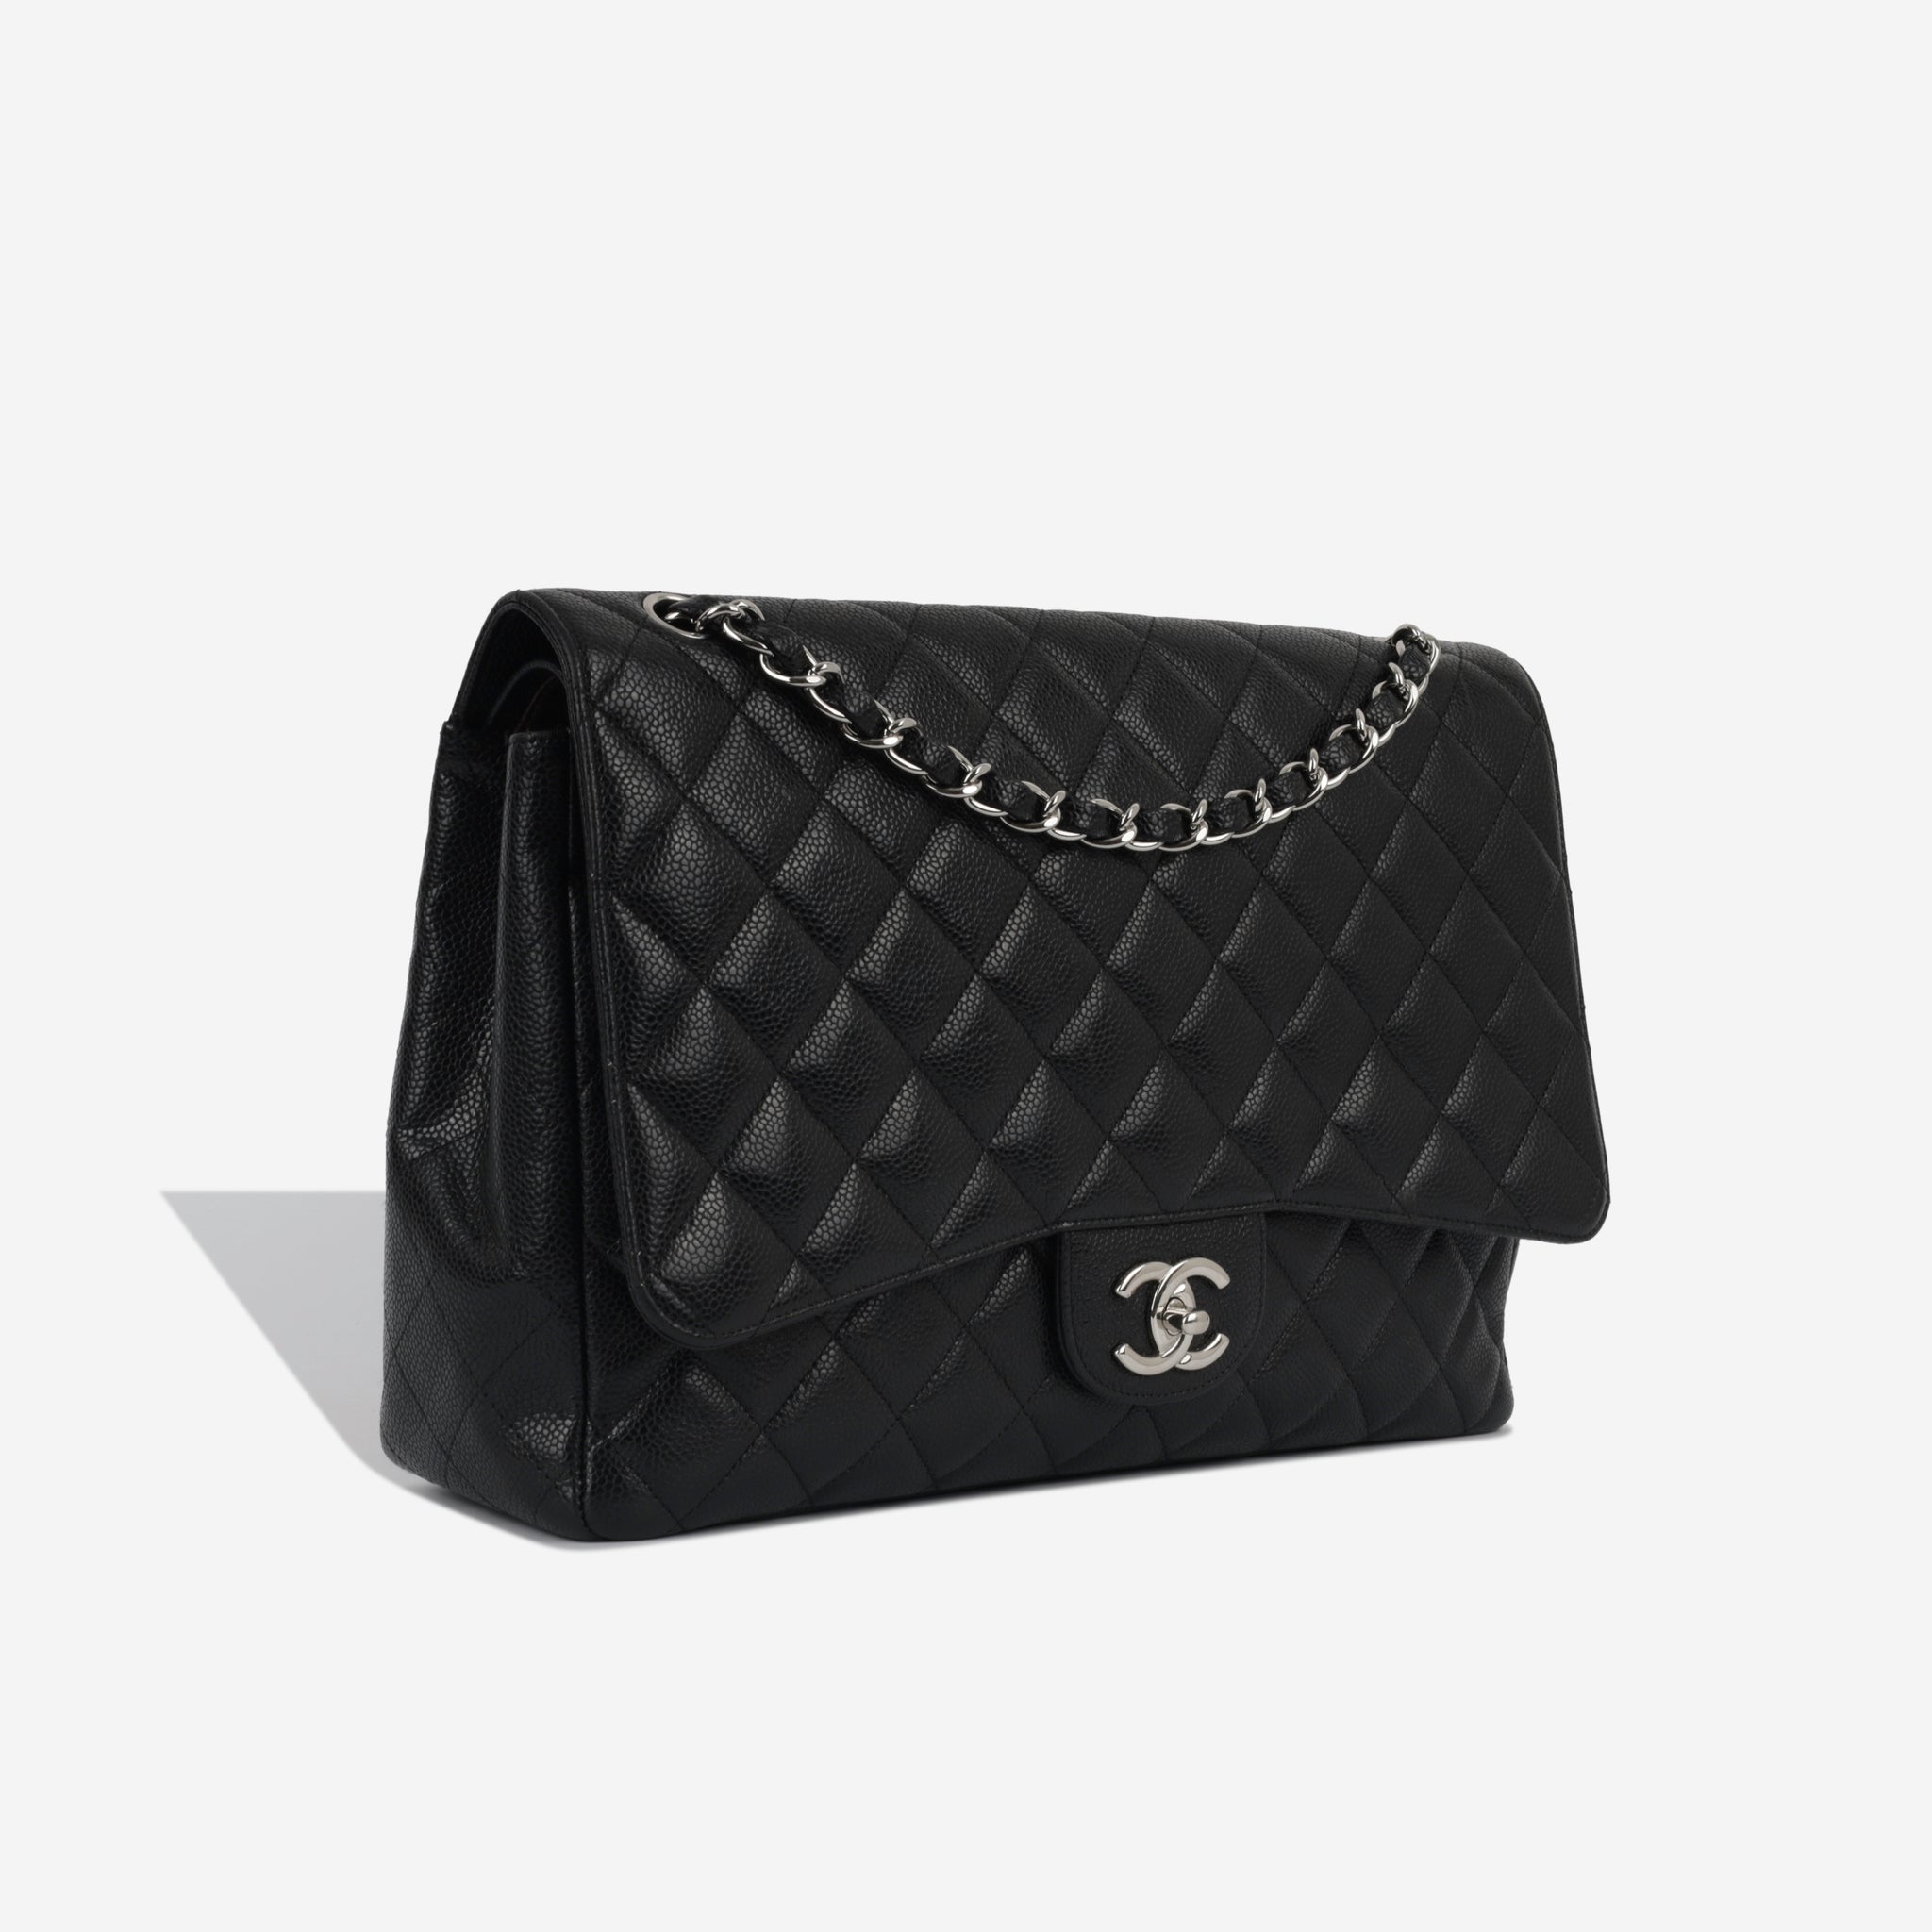 Chanel - Classic Flap Bag - Maxi - Black Caviar SHW - Pre Loved